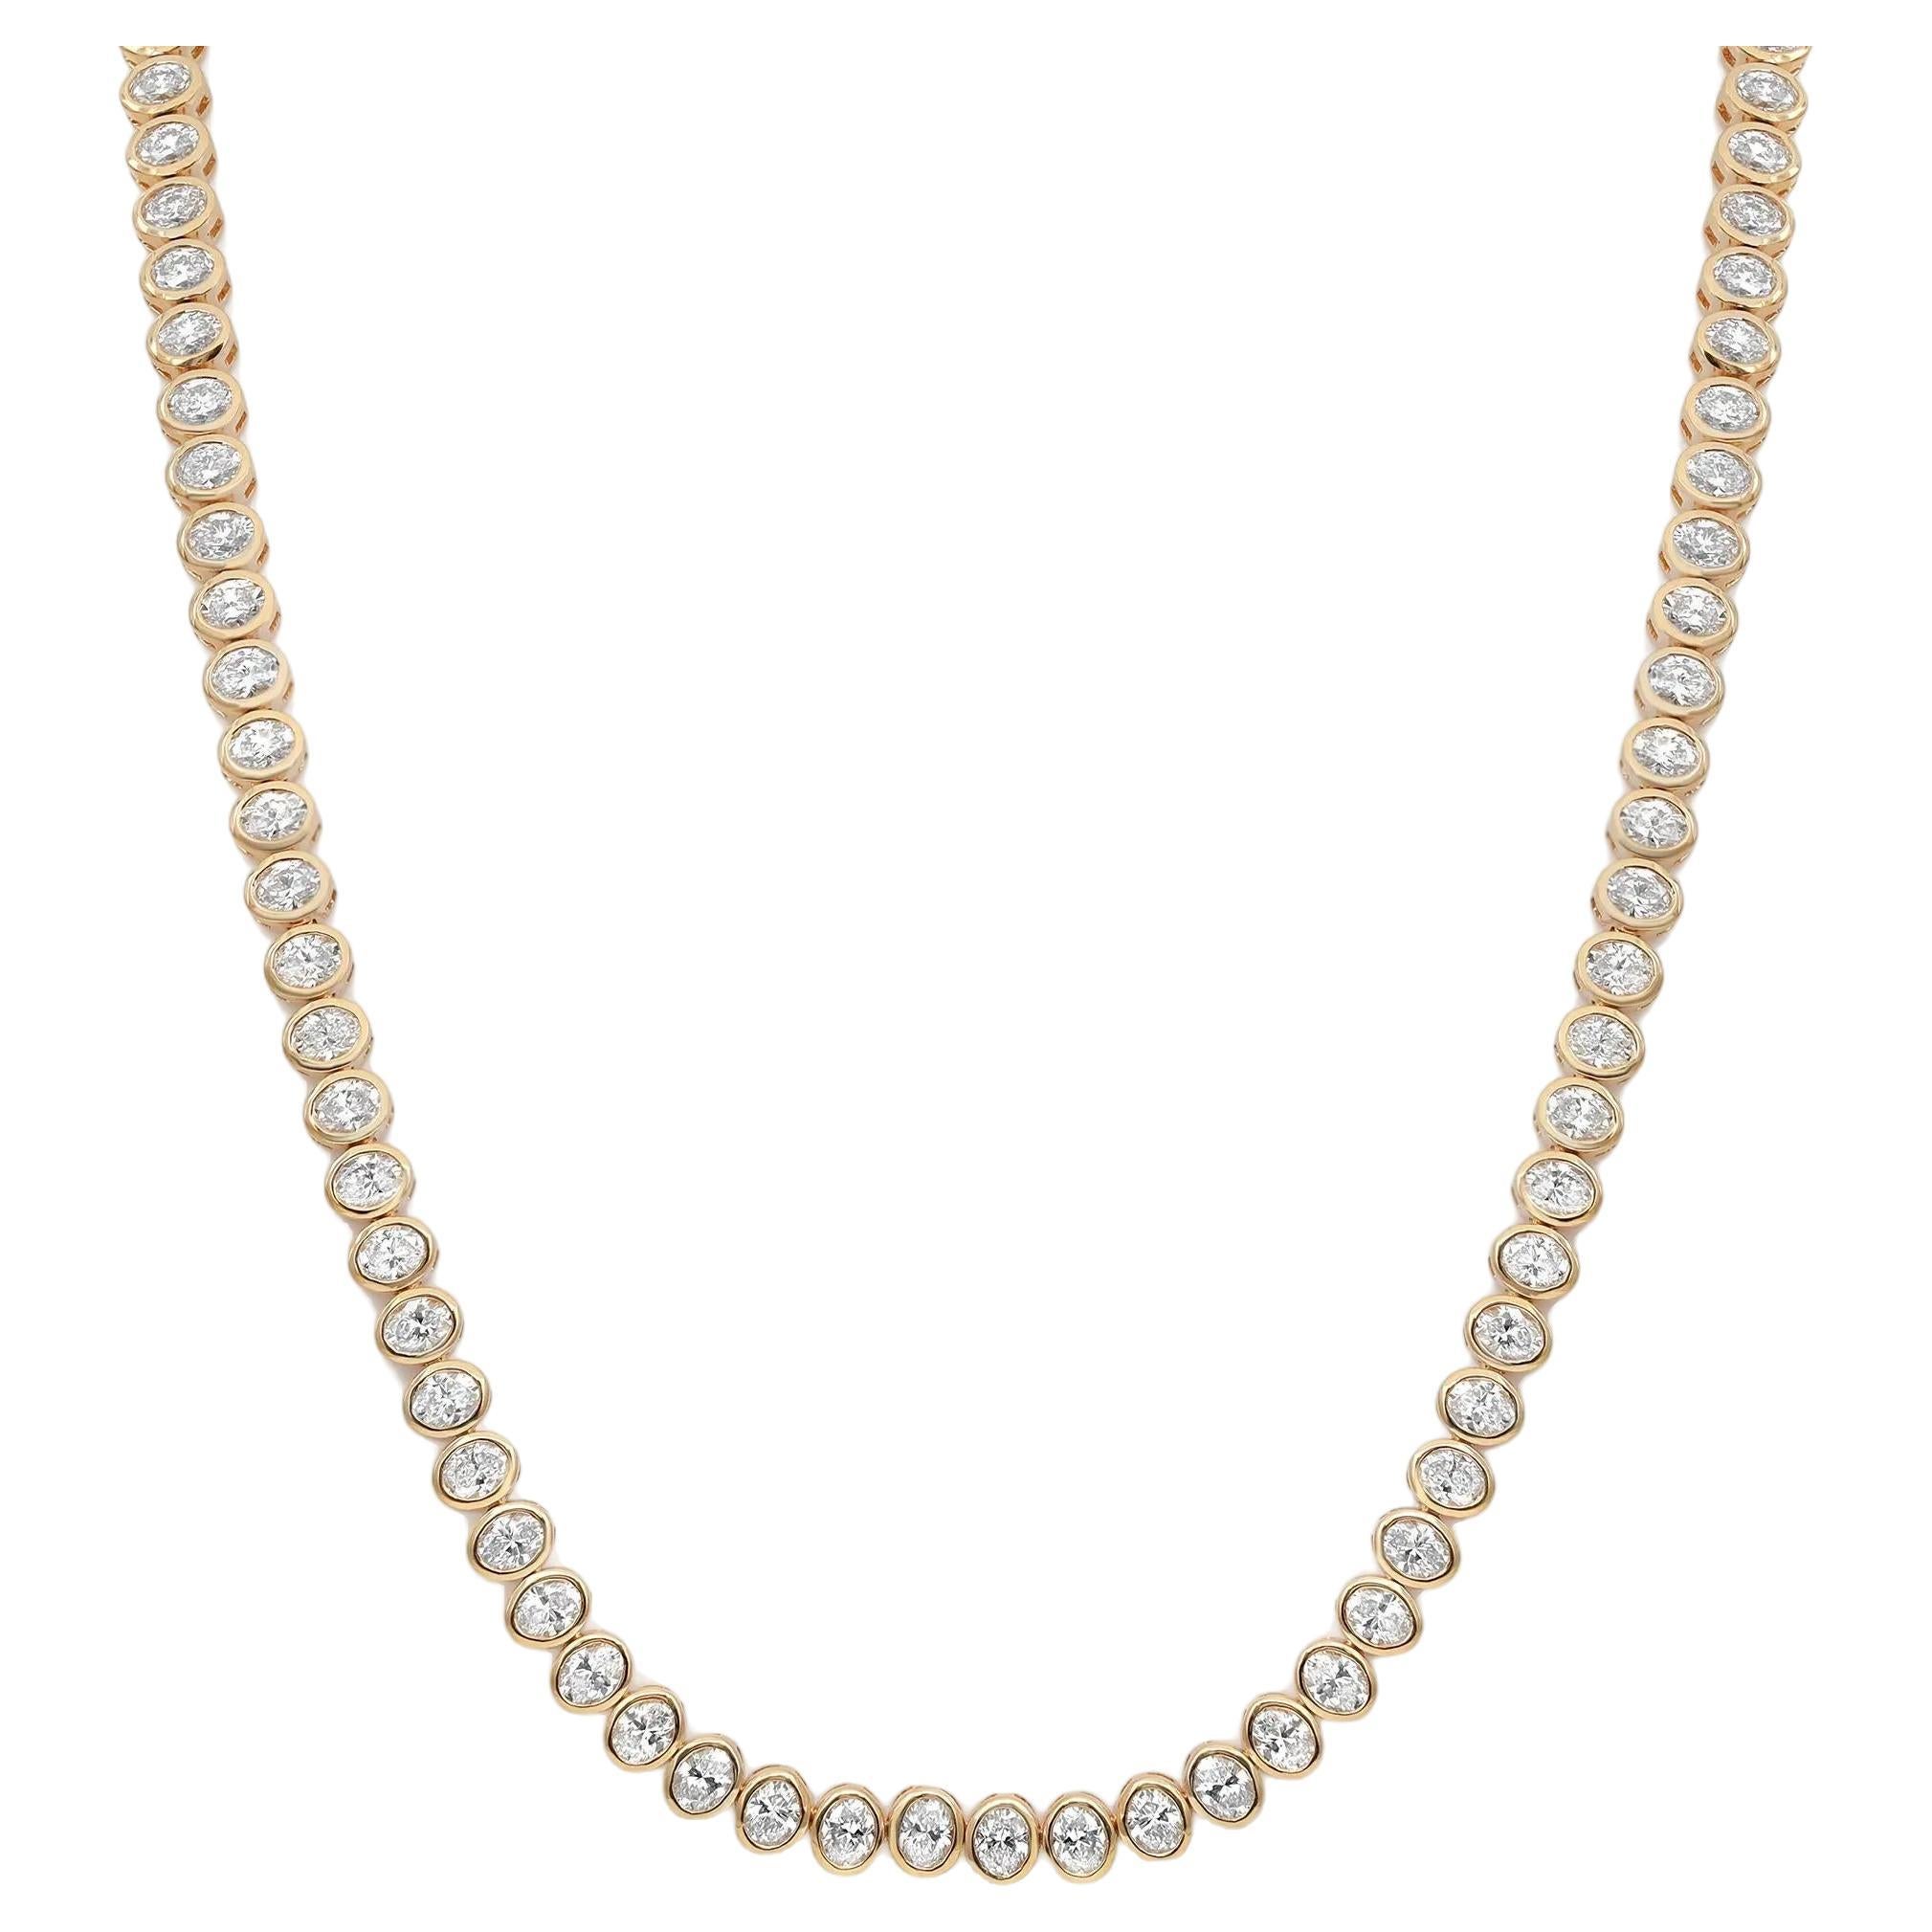 Bezel Set Oval Cut Diamond Tennis Necklace 18K White Gold 14.76Cttw 17 Inches For Sale